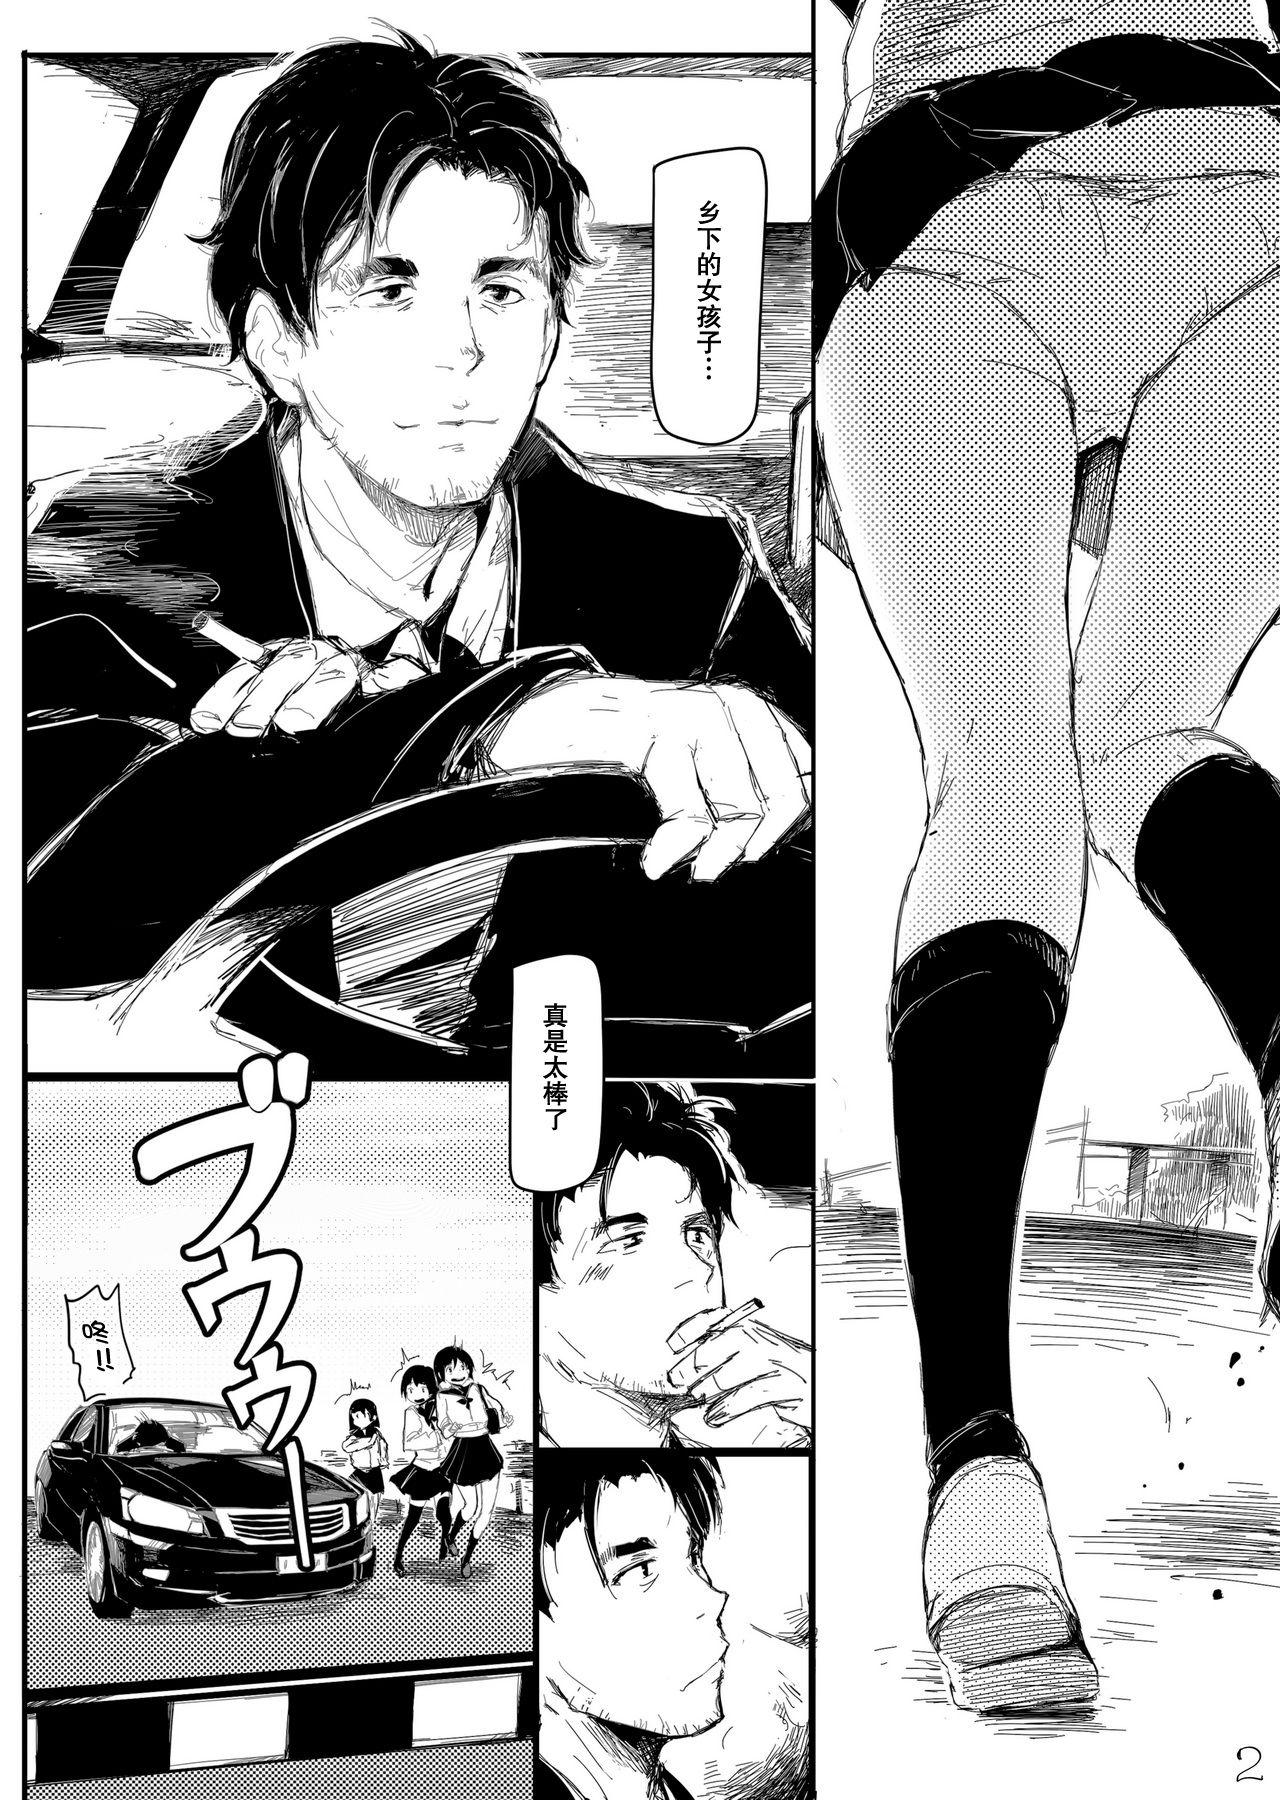 Booty Mijukuna ringo Safadinha - Page 3